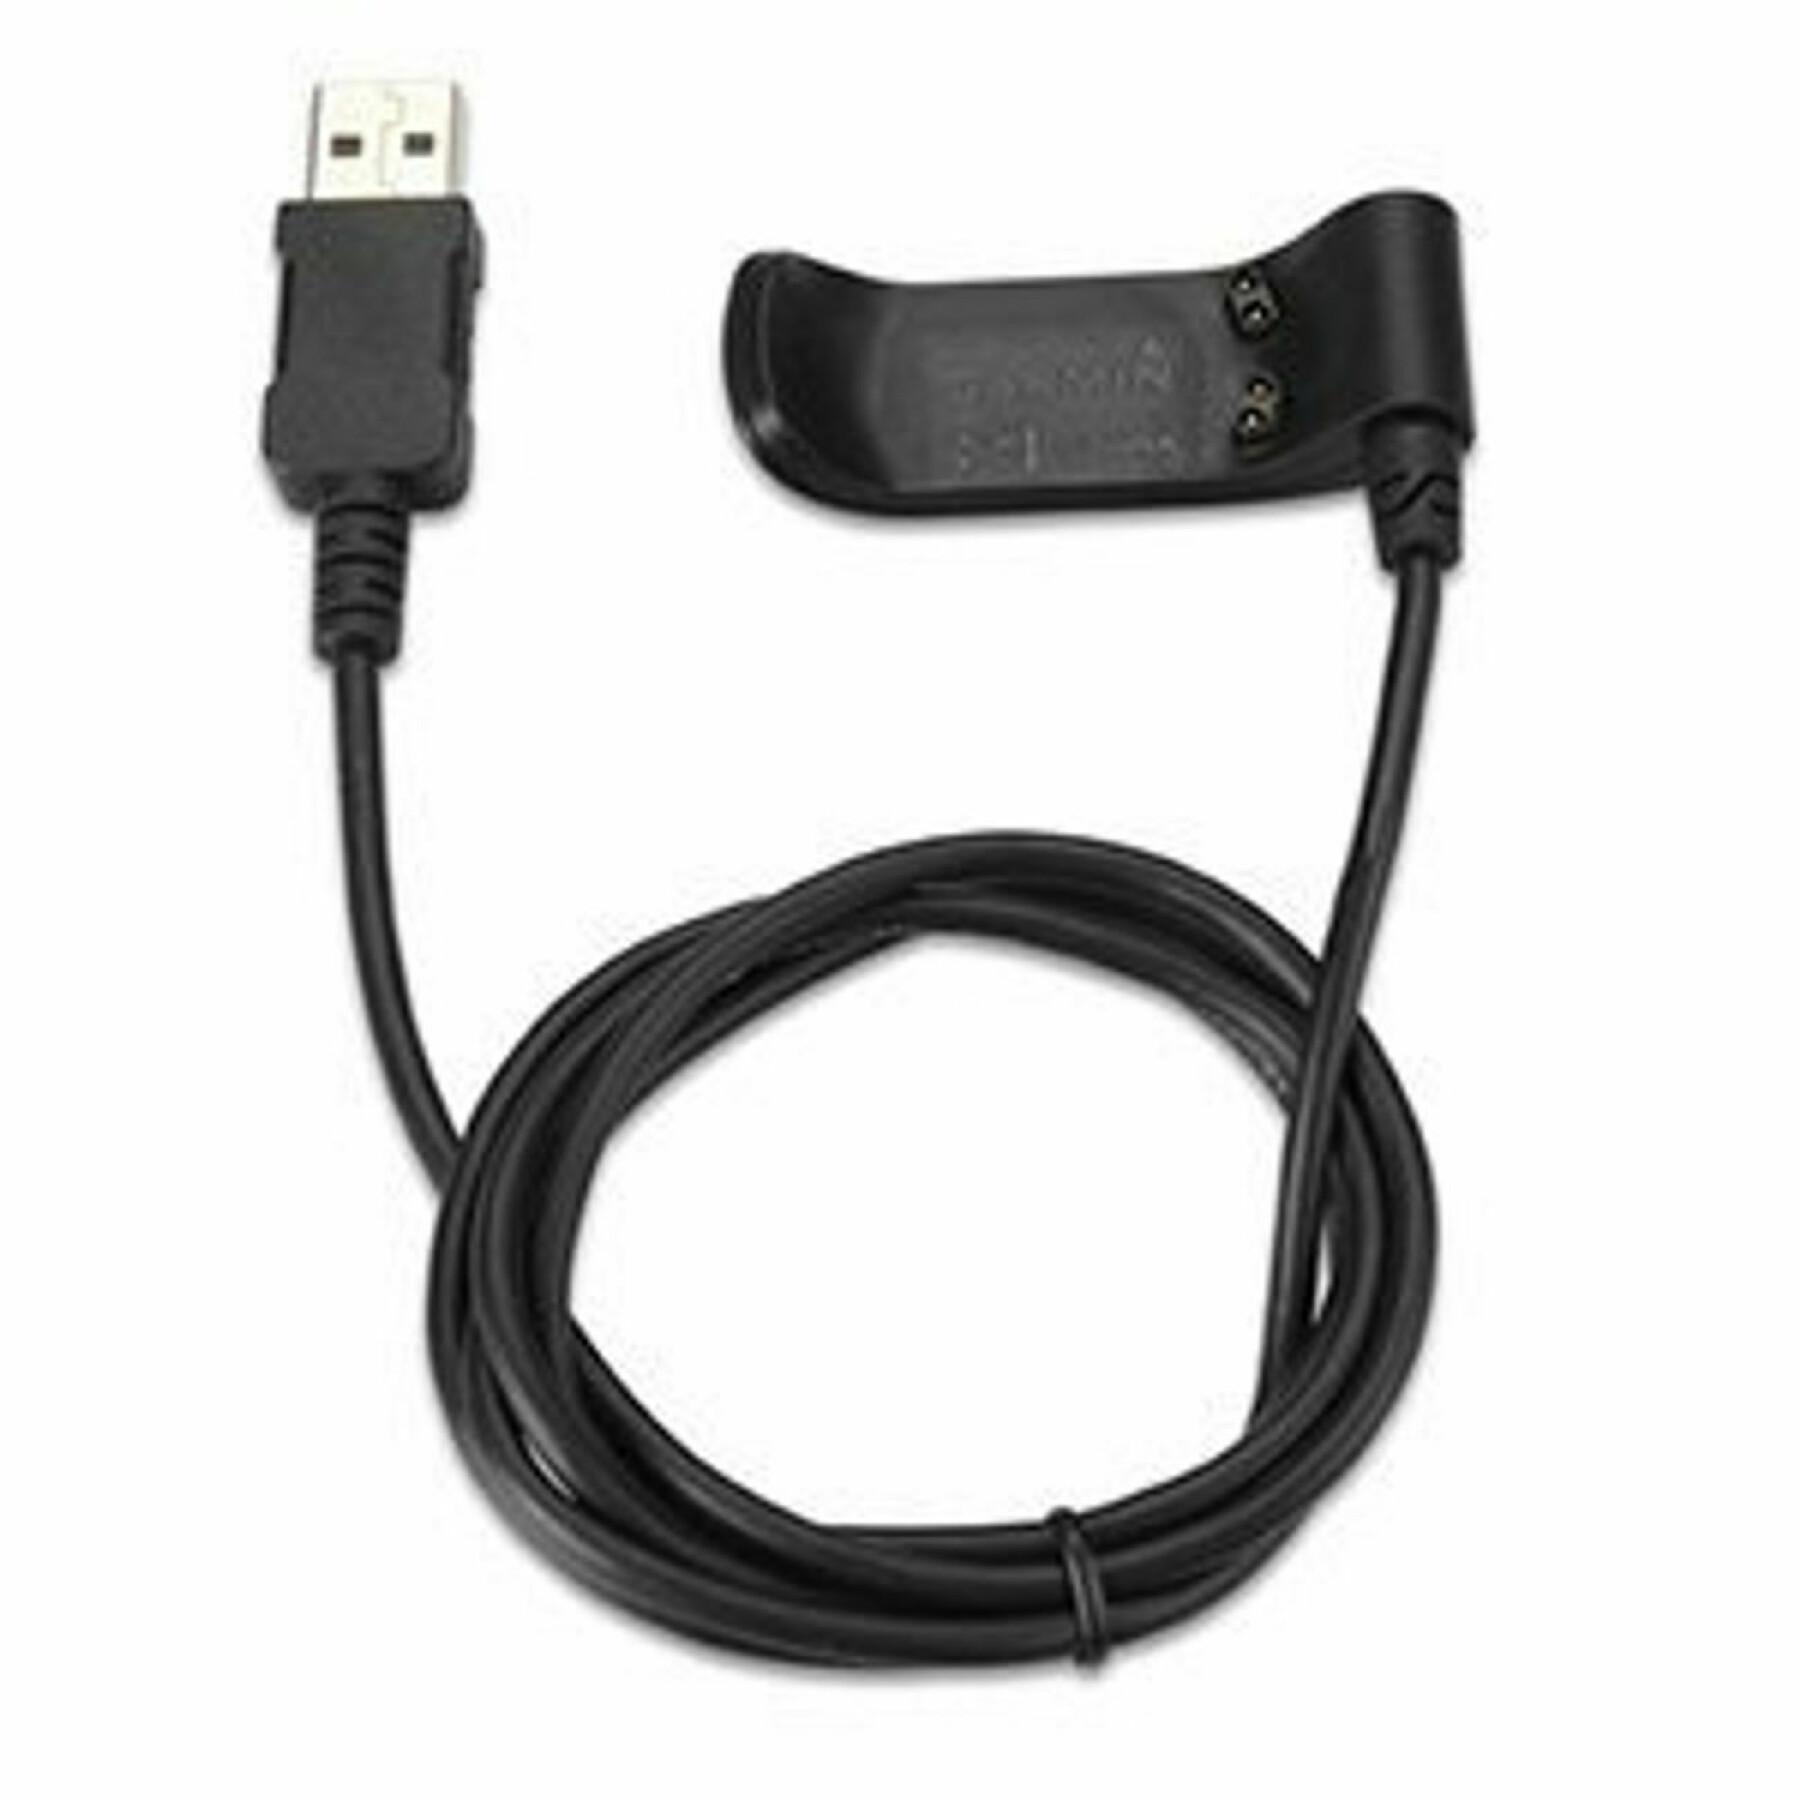 Usb cable Garmin chargement